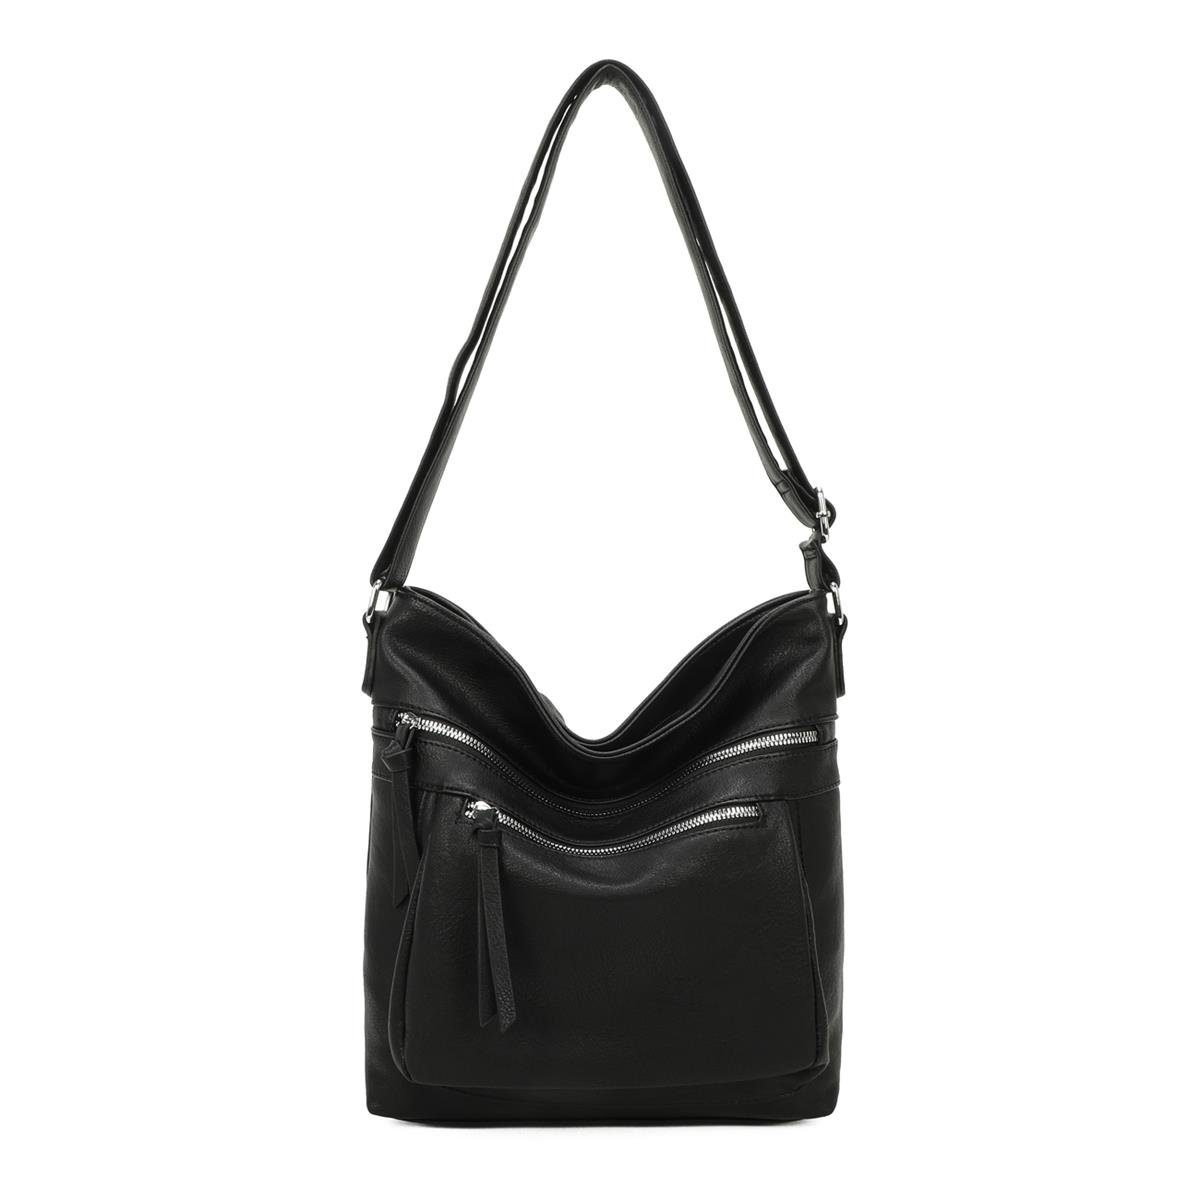 ITALYSHOP24 Schultertasche Damen Tasche Shopper Crossbody, als Handtasche, Umhängetasche, Hobo Bag tragbar